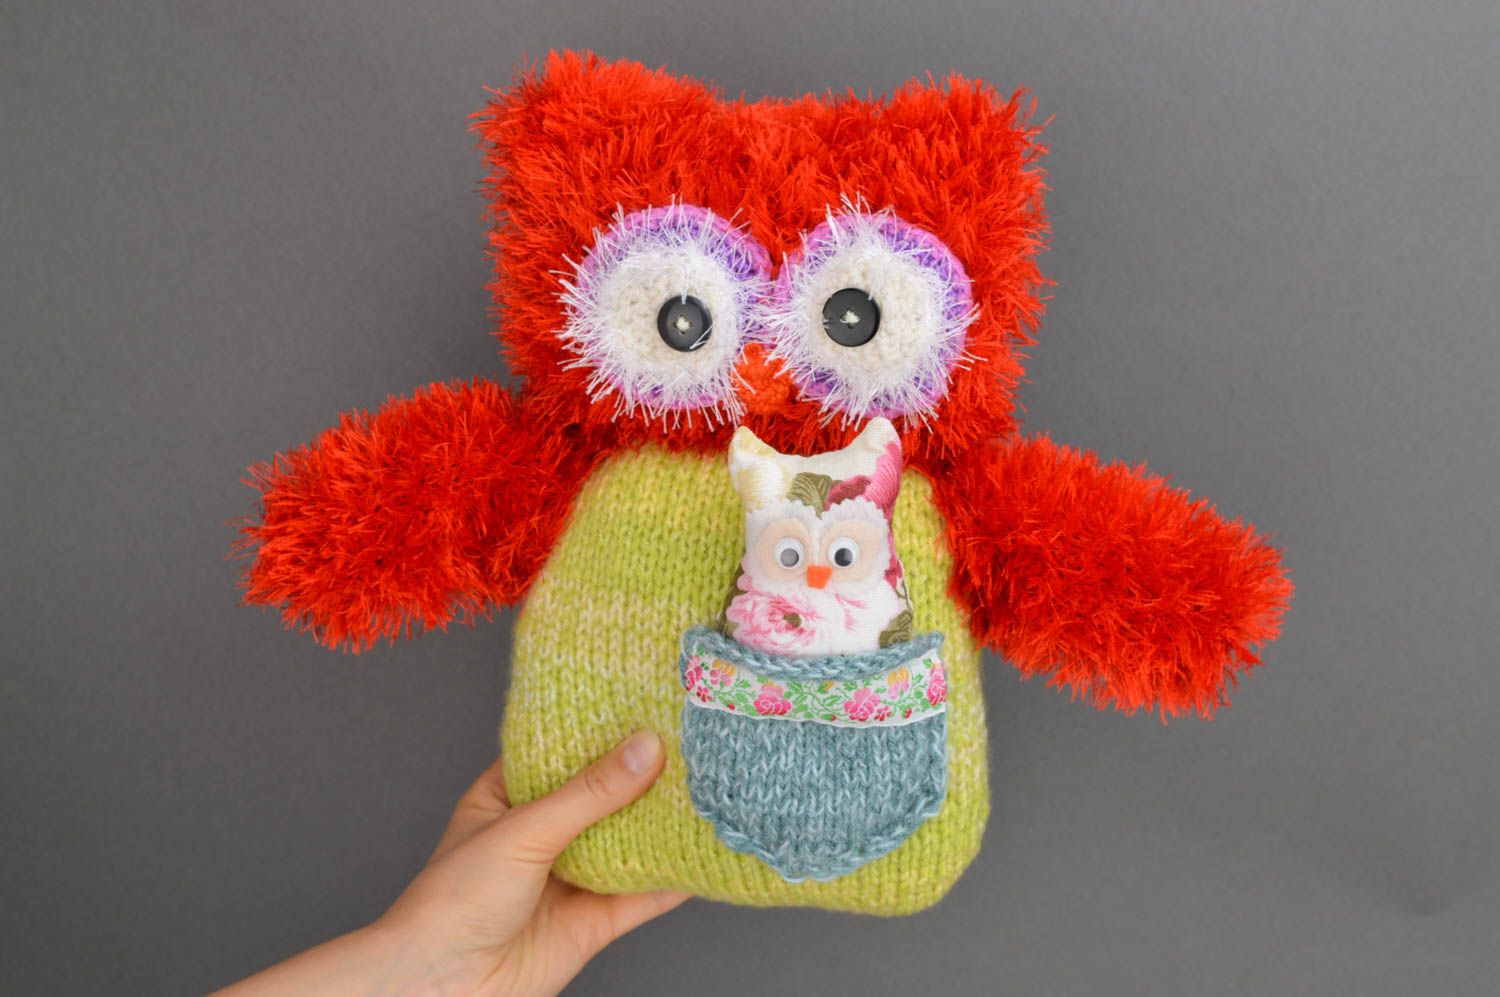 Handmade stuffed owl toy decorative soft toy gift for baby nursery decor ideas photo 5